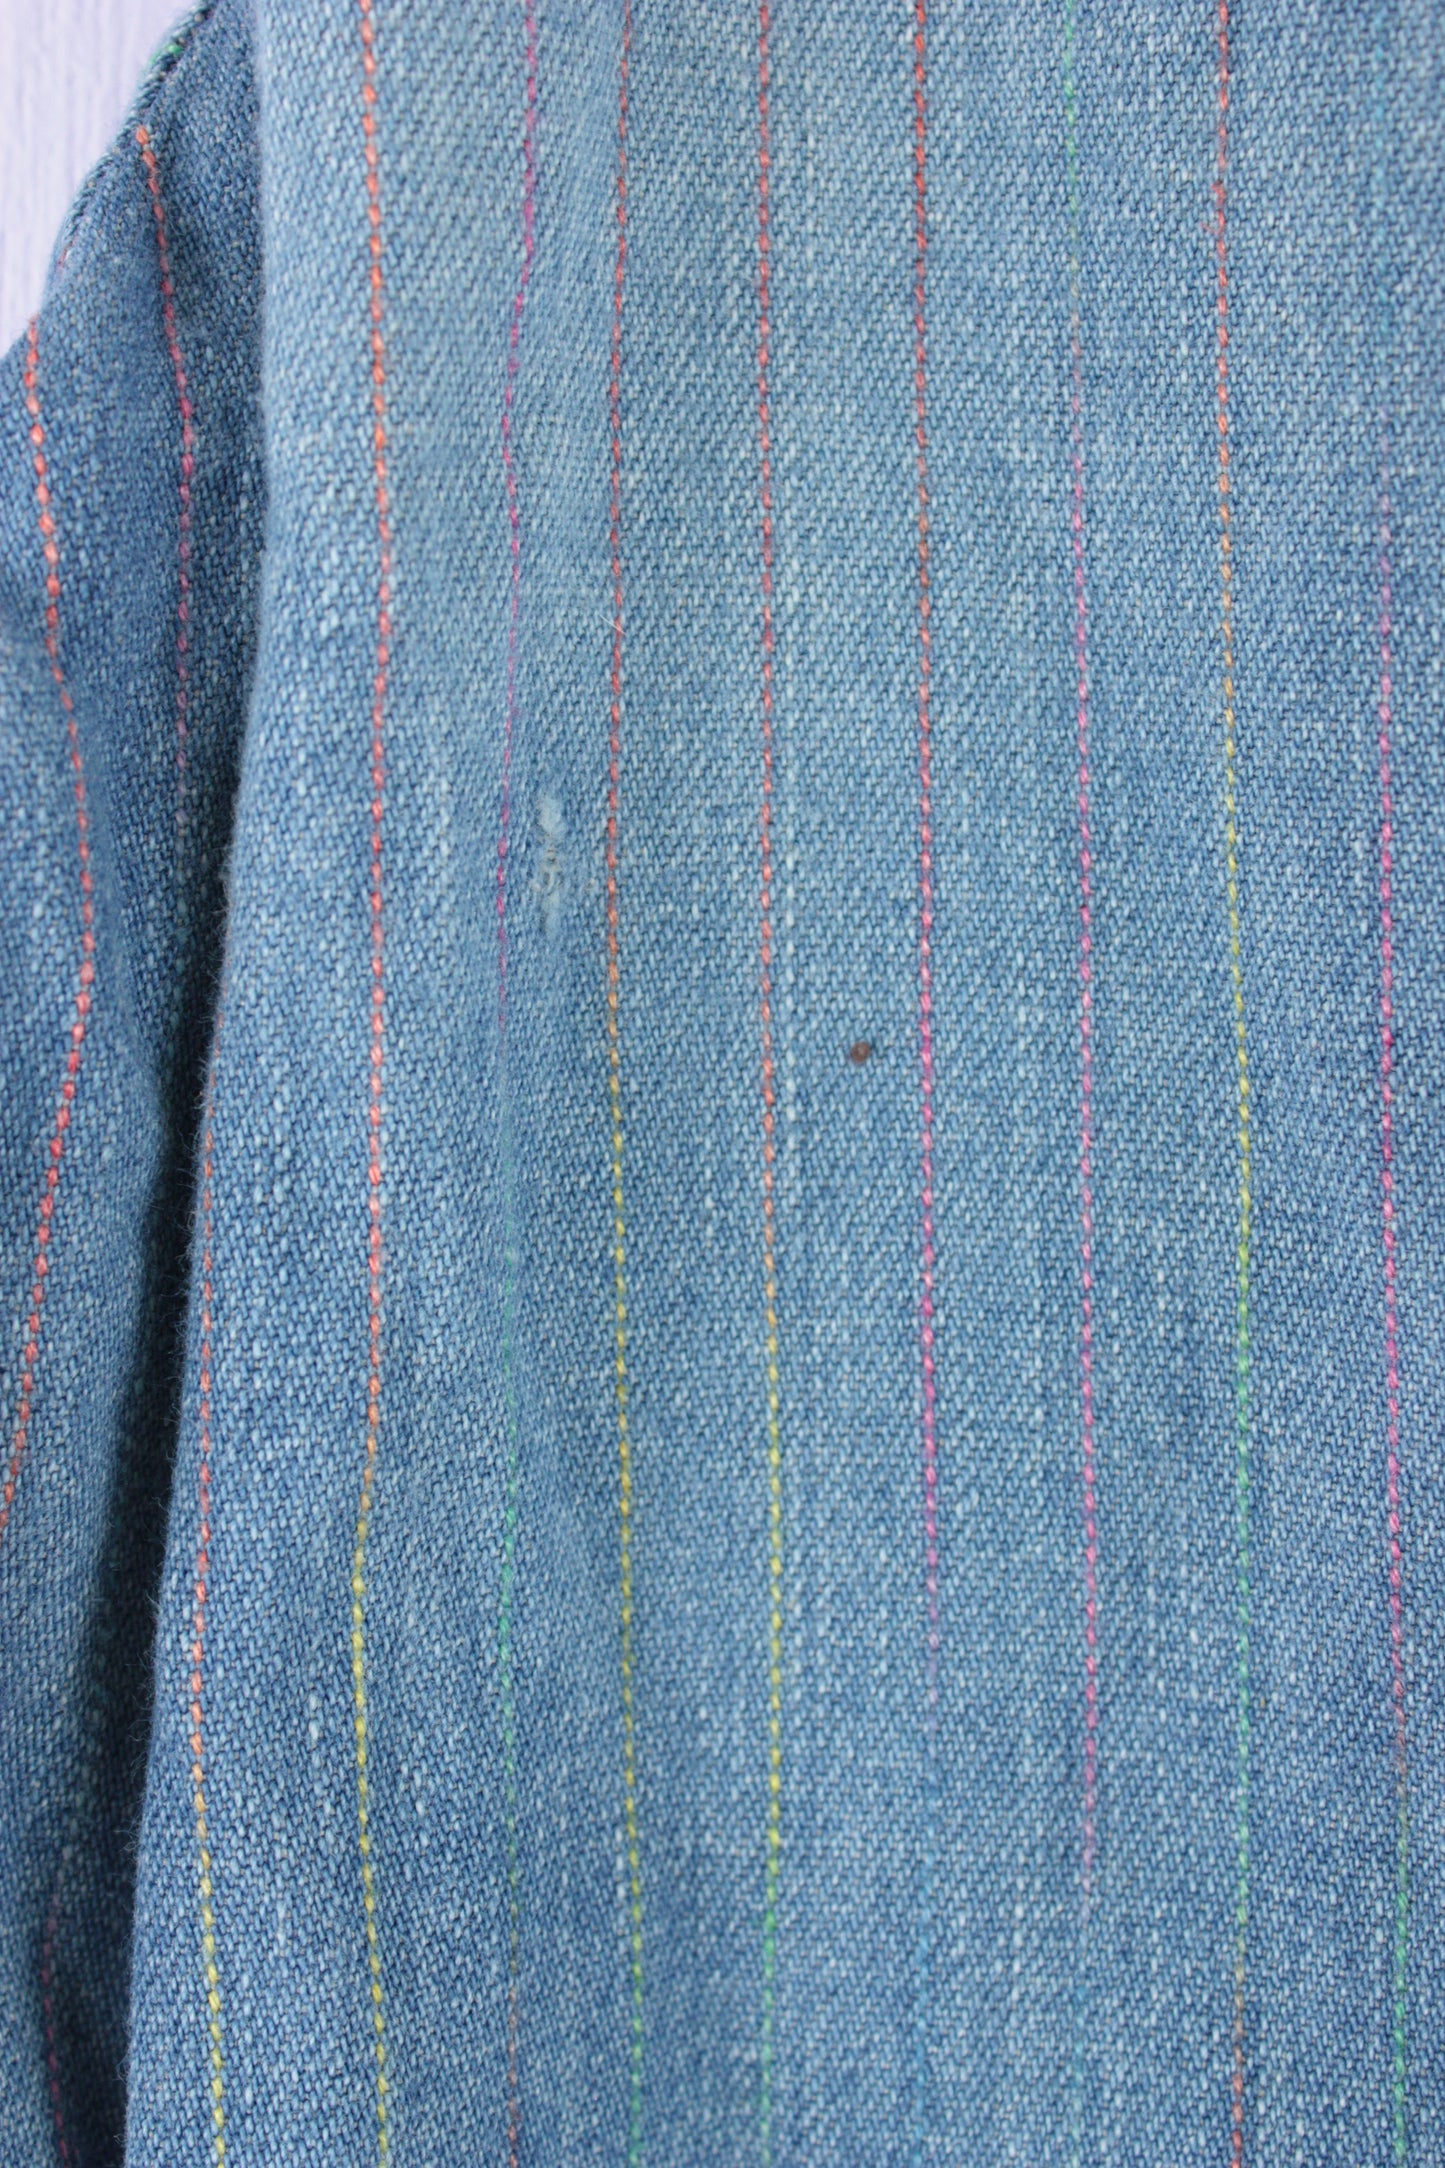 70s Striped Denim Jeans Multicolor 26x23